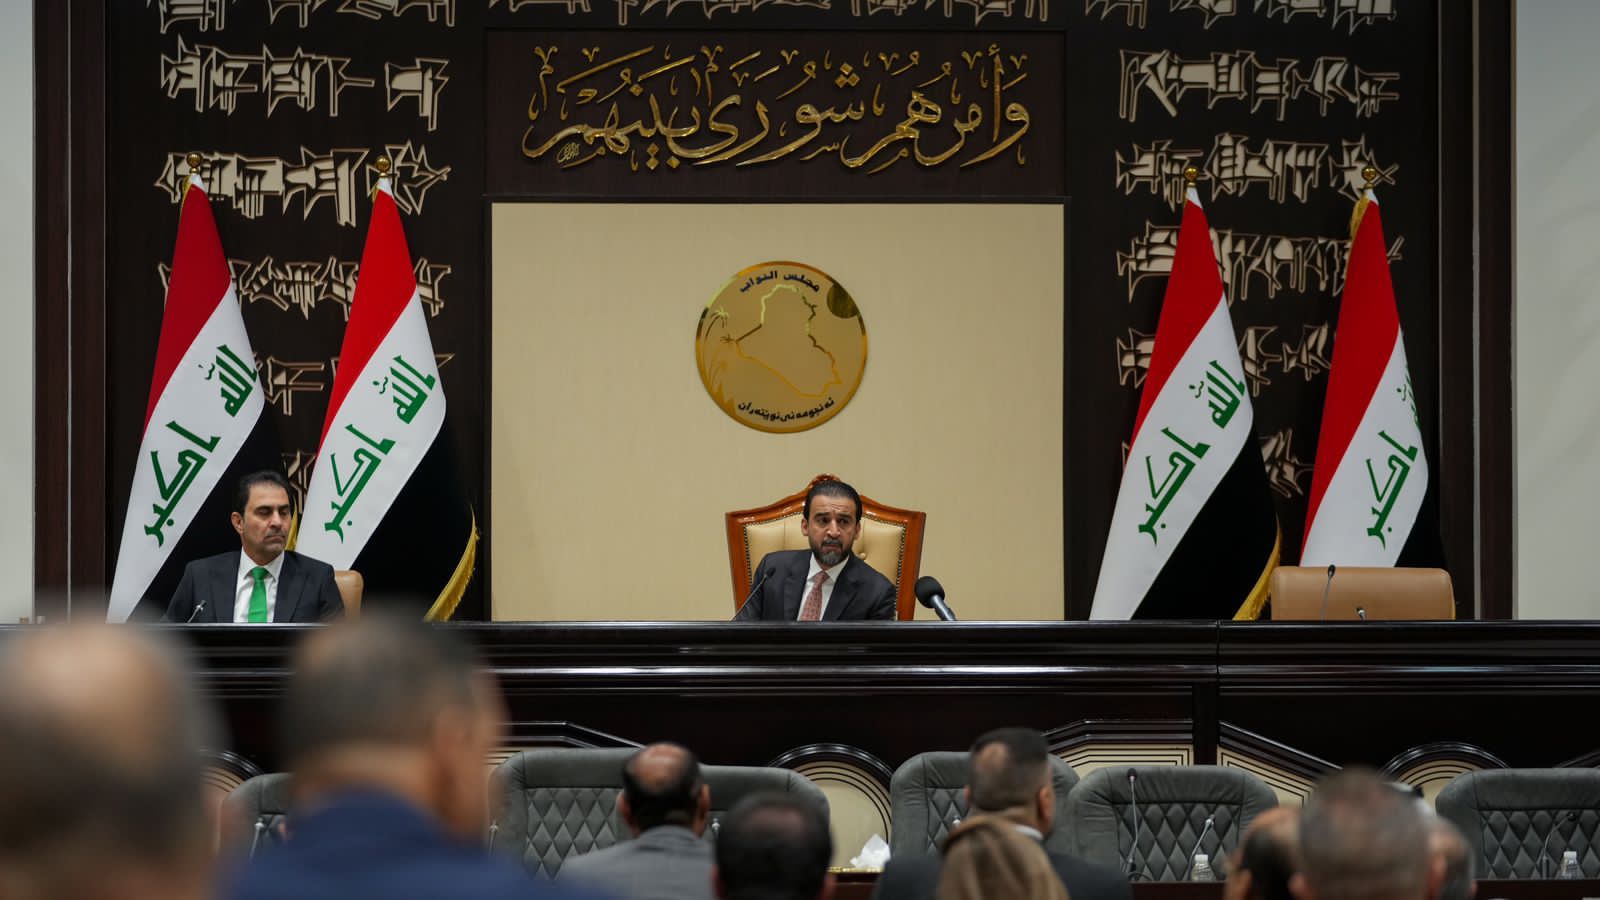 Iraq's legislative body to convene Thursday to elect president, says speaker